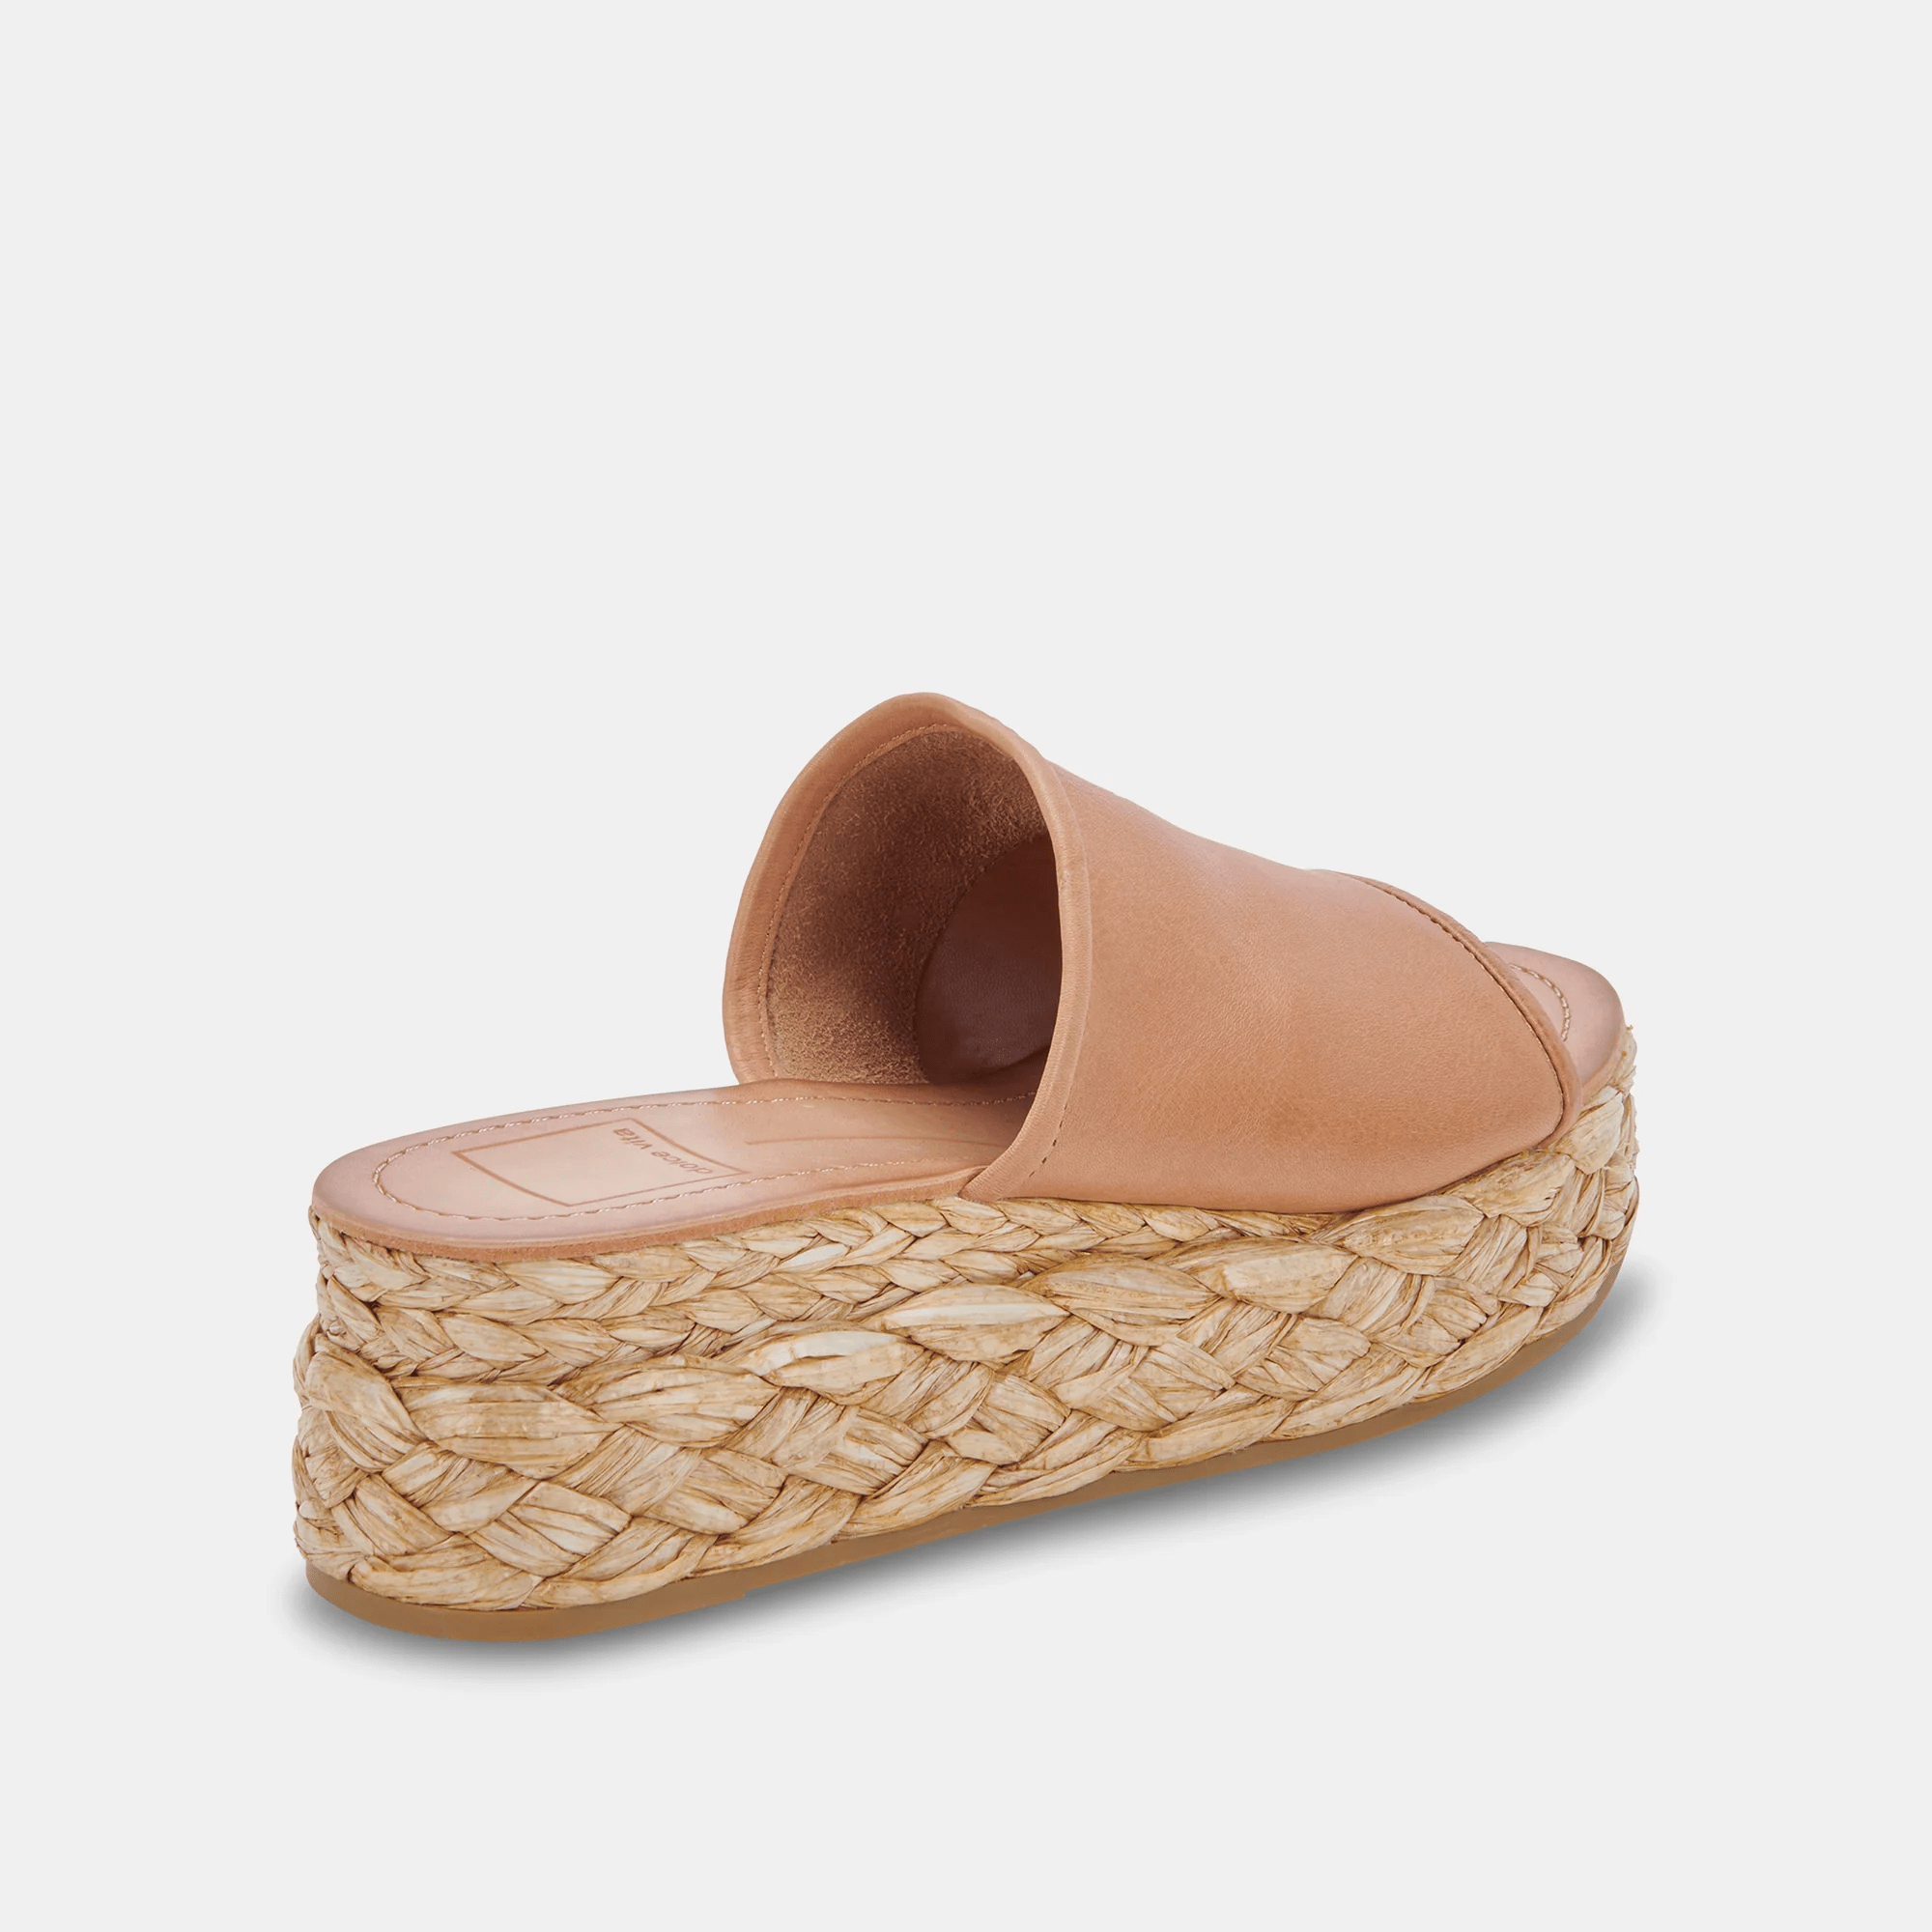 Pablos Leather Sandals -Dolce Vita- Ruby Jane-